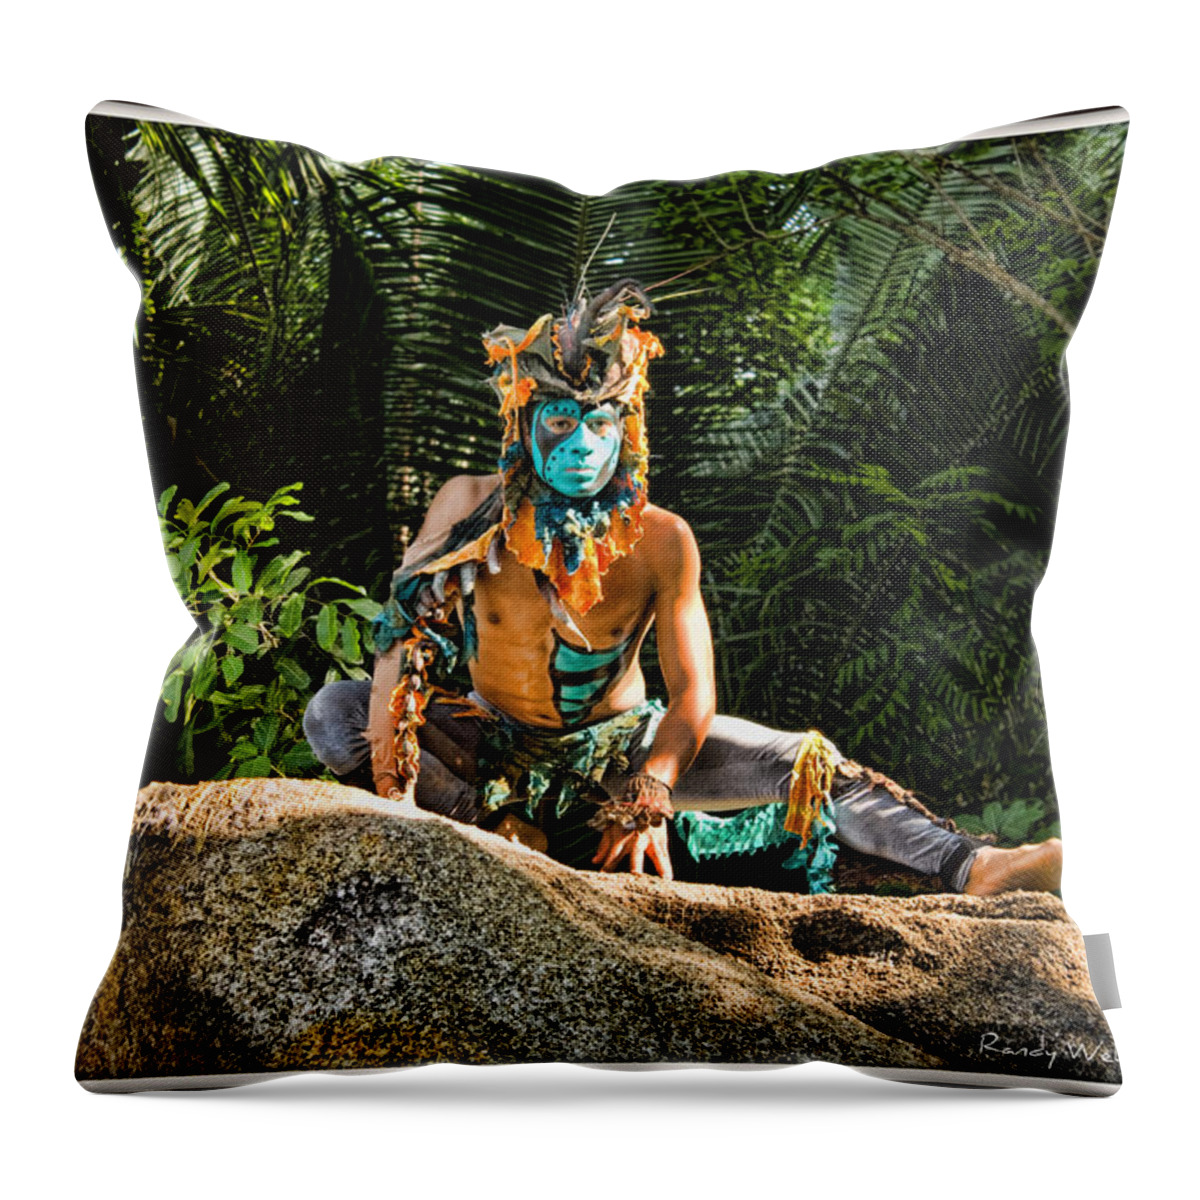  Throw Pillow featuring the photograph Aztec Lizard Warrior by Randy Wehner